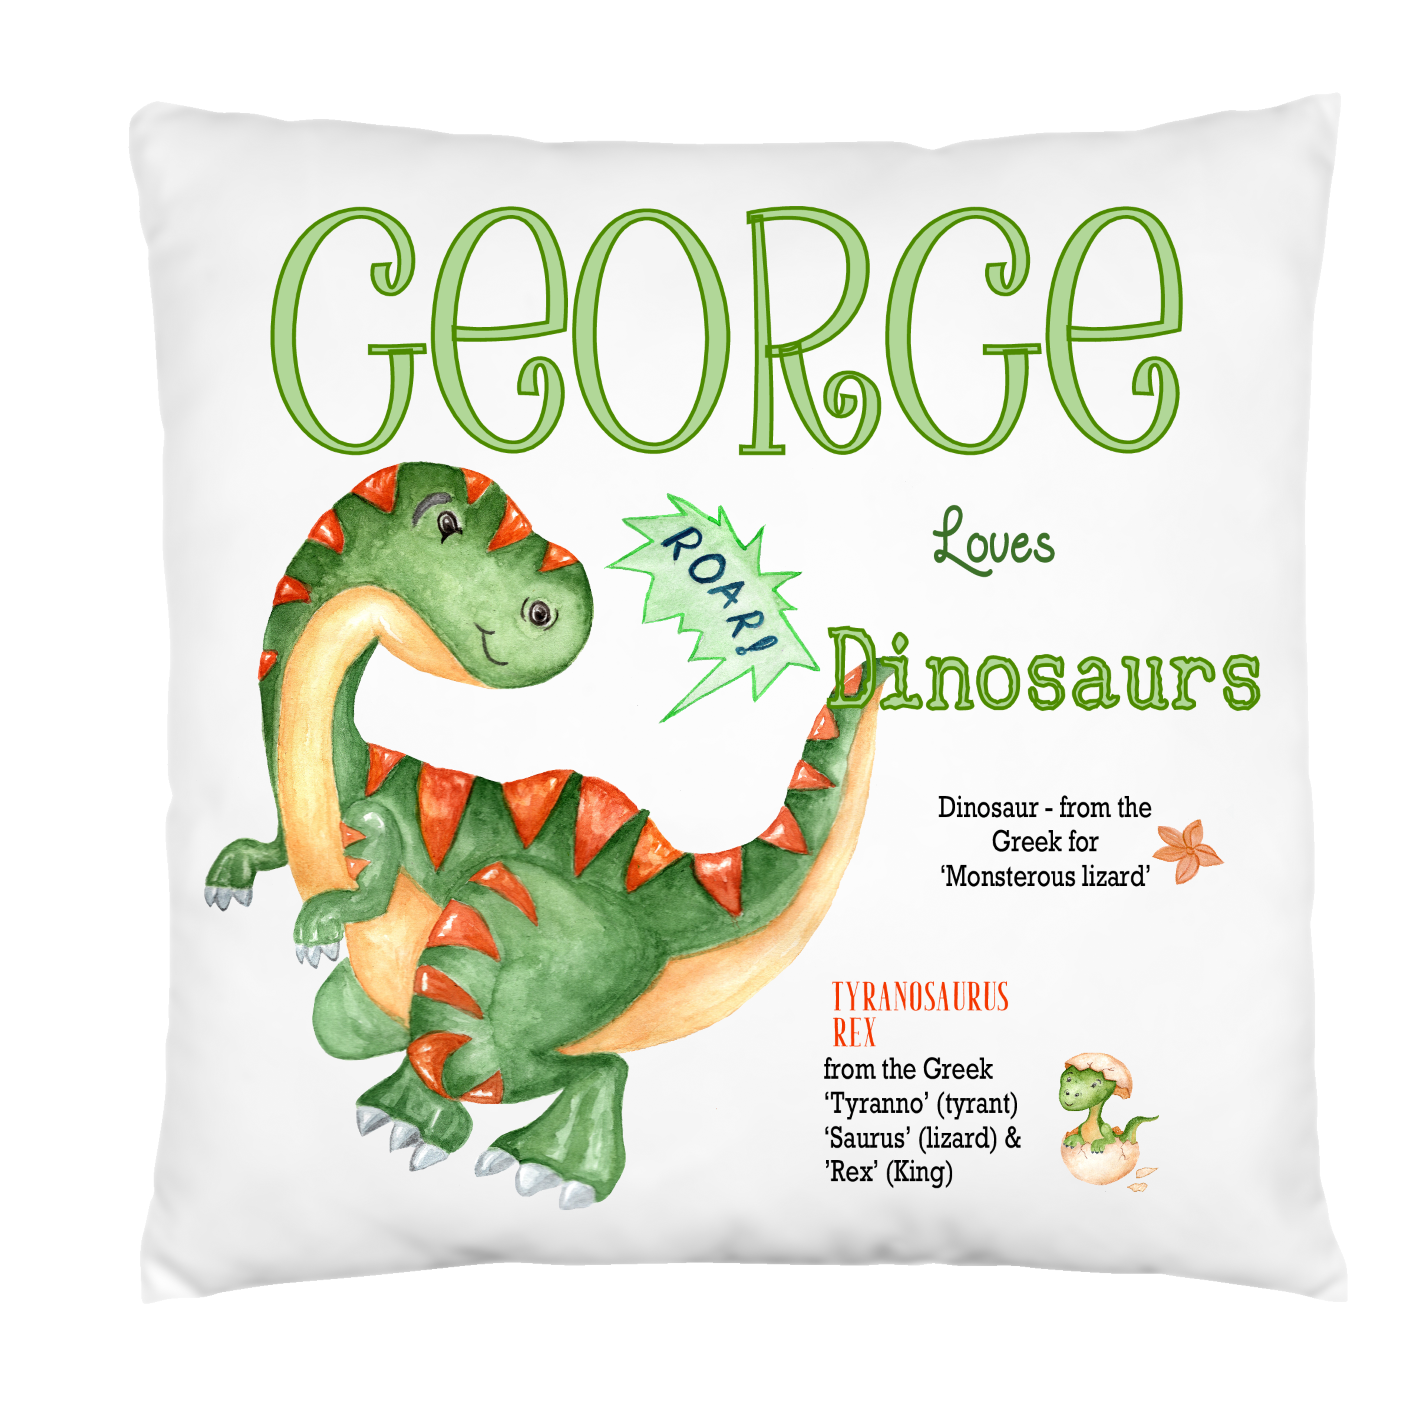 Personalised Dinosaur Cushion,Pillow,Dinosaurs,Dinosaur Gift,Kids Bedroom,Playroom,Home Decor